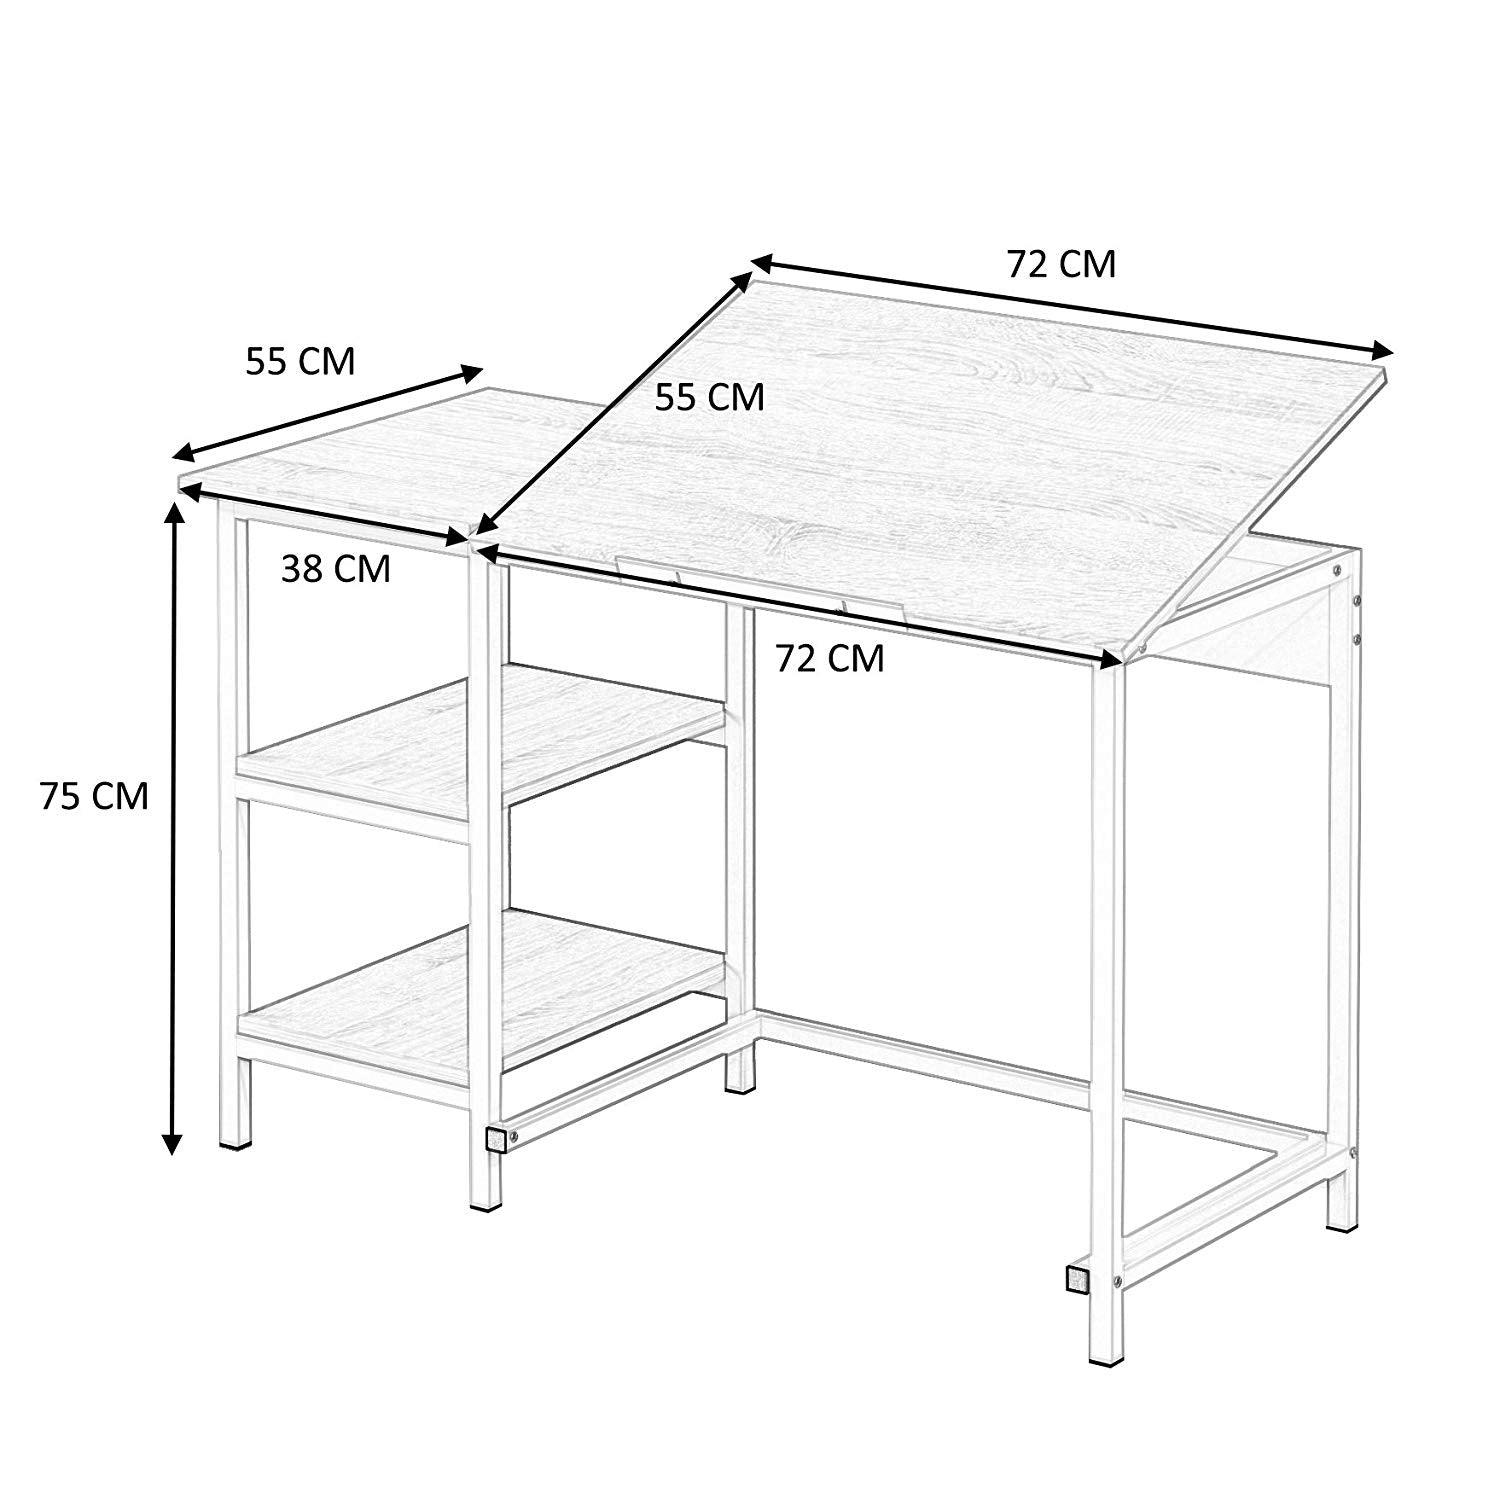 Atelier Adjustable Desk with Shelves in White